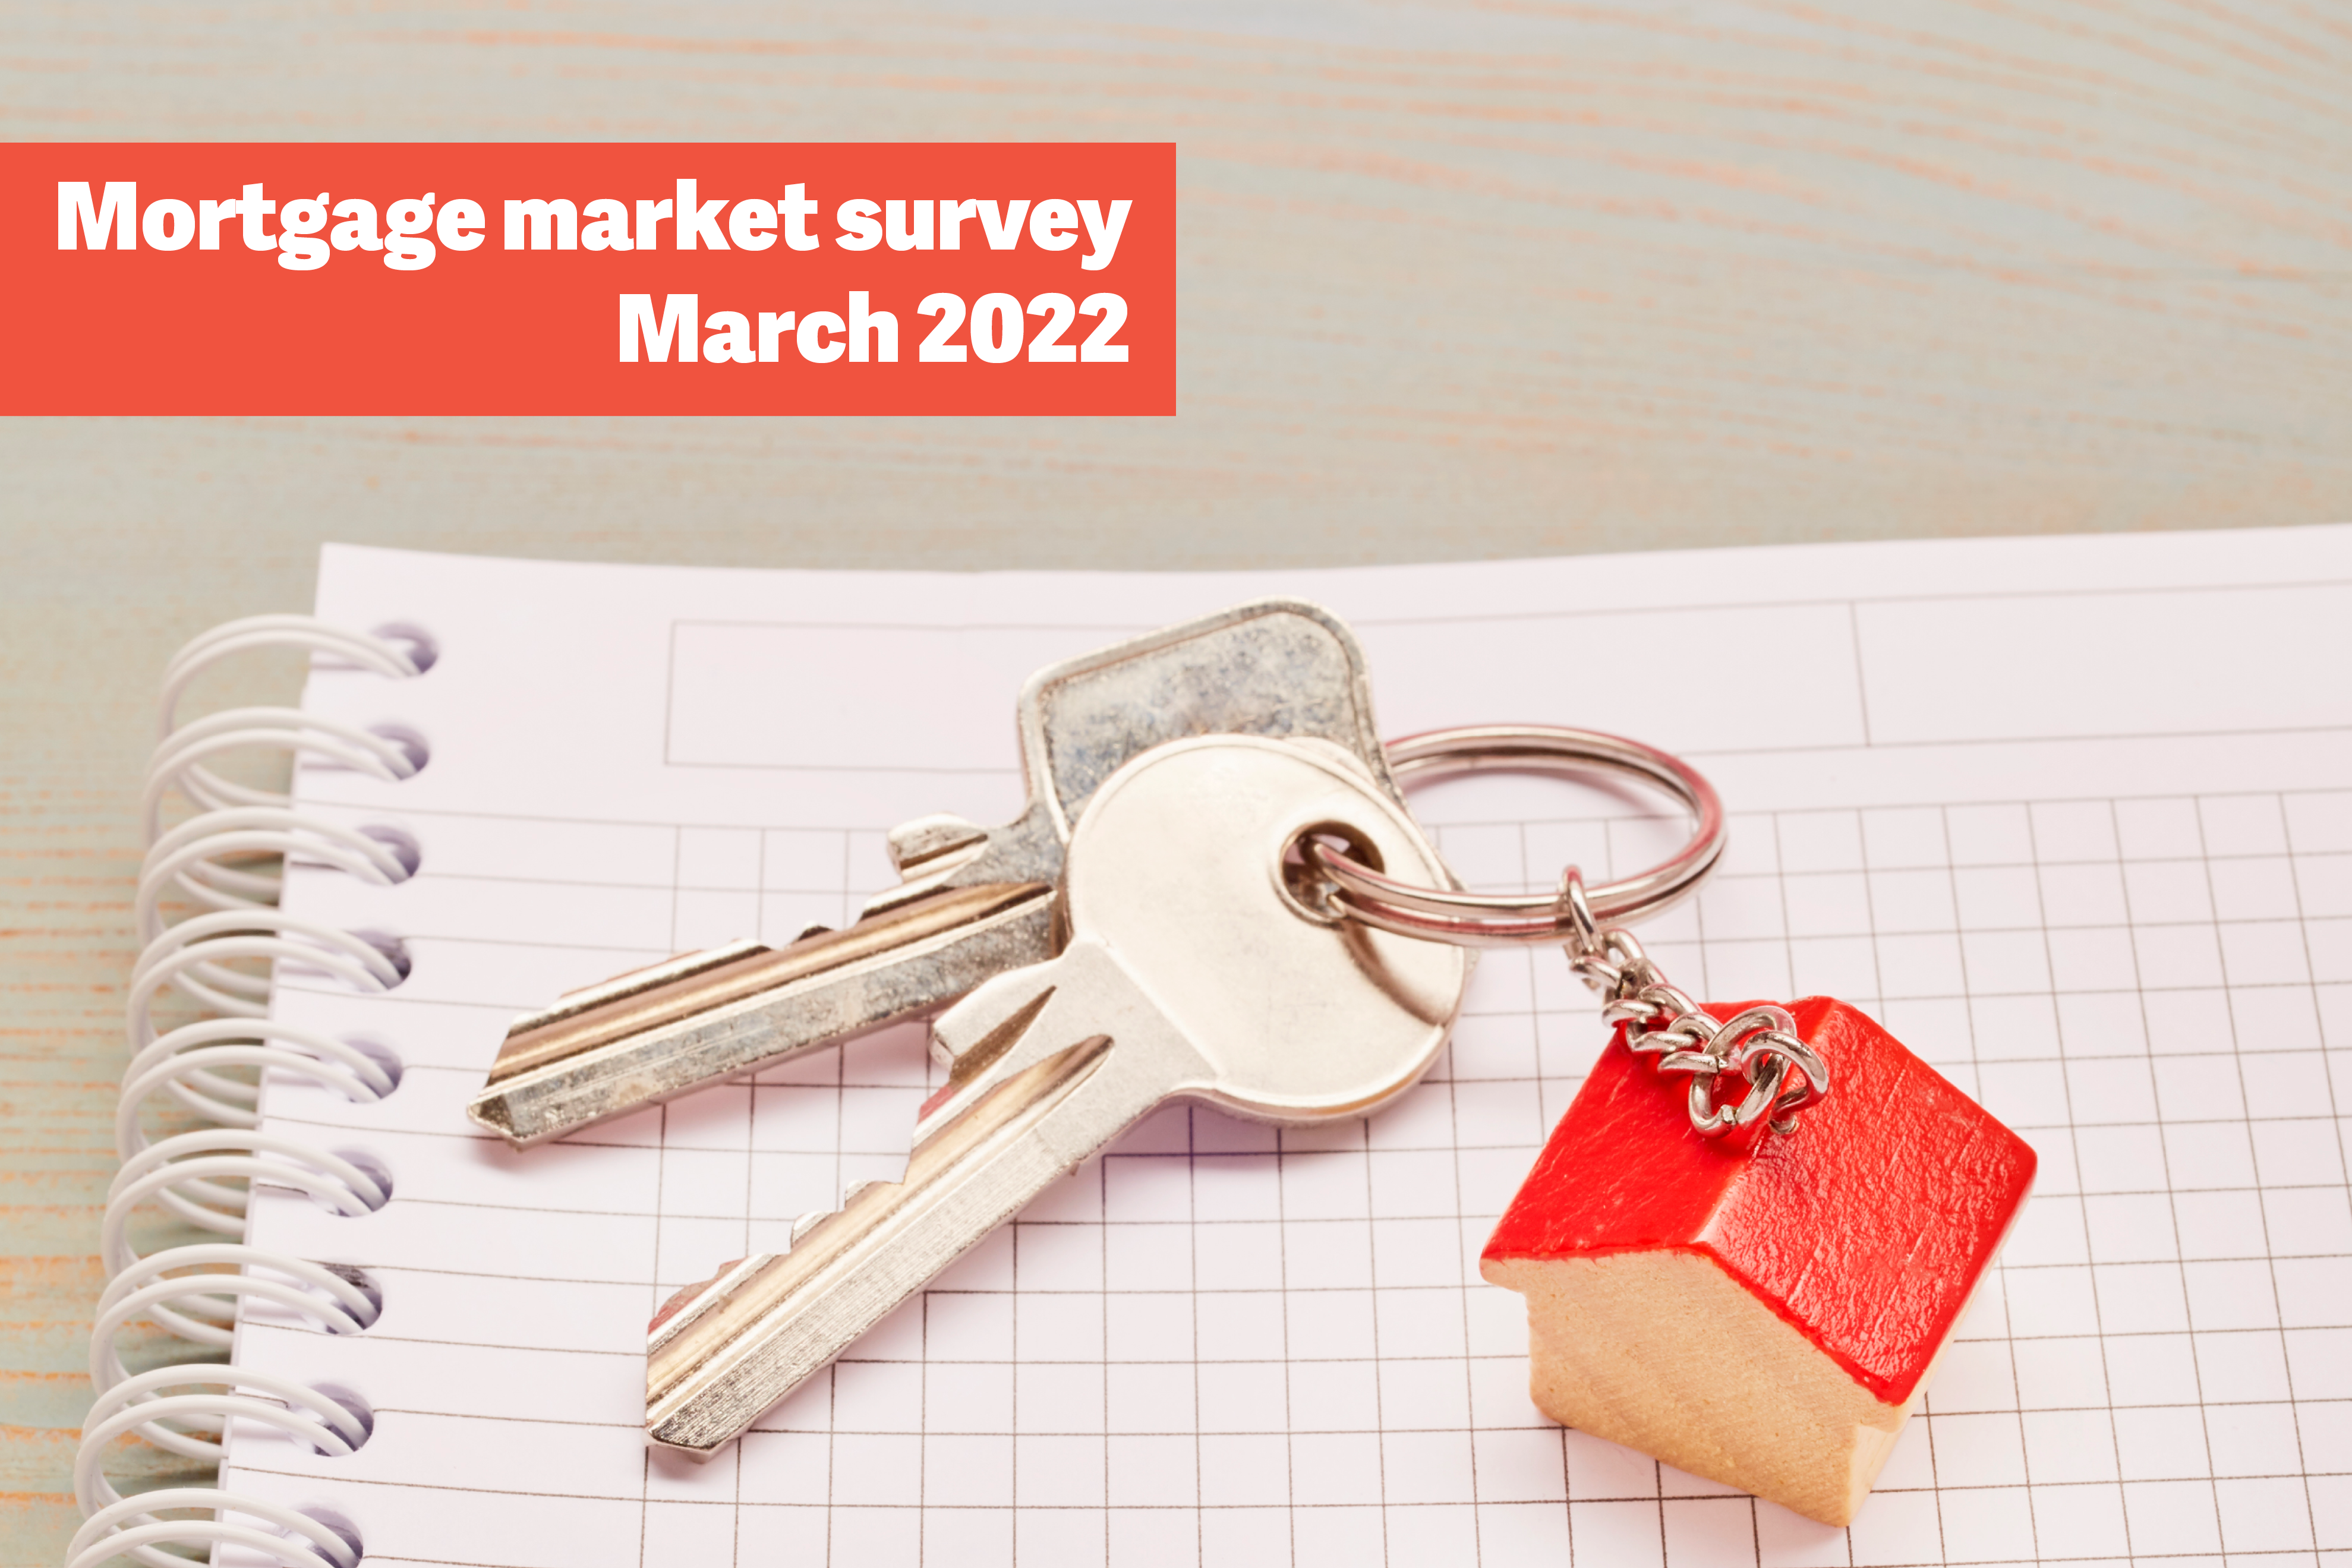 Mortgage market survey March 2022 with Tom LaMalfa